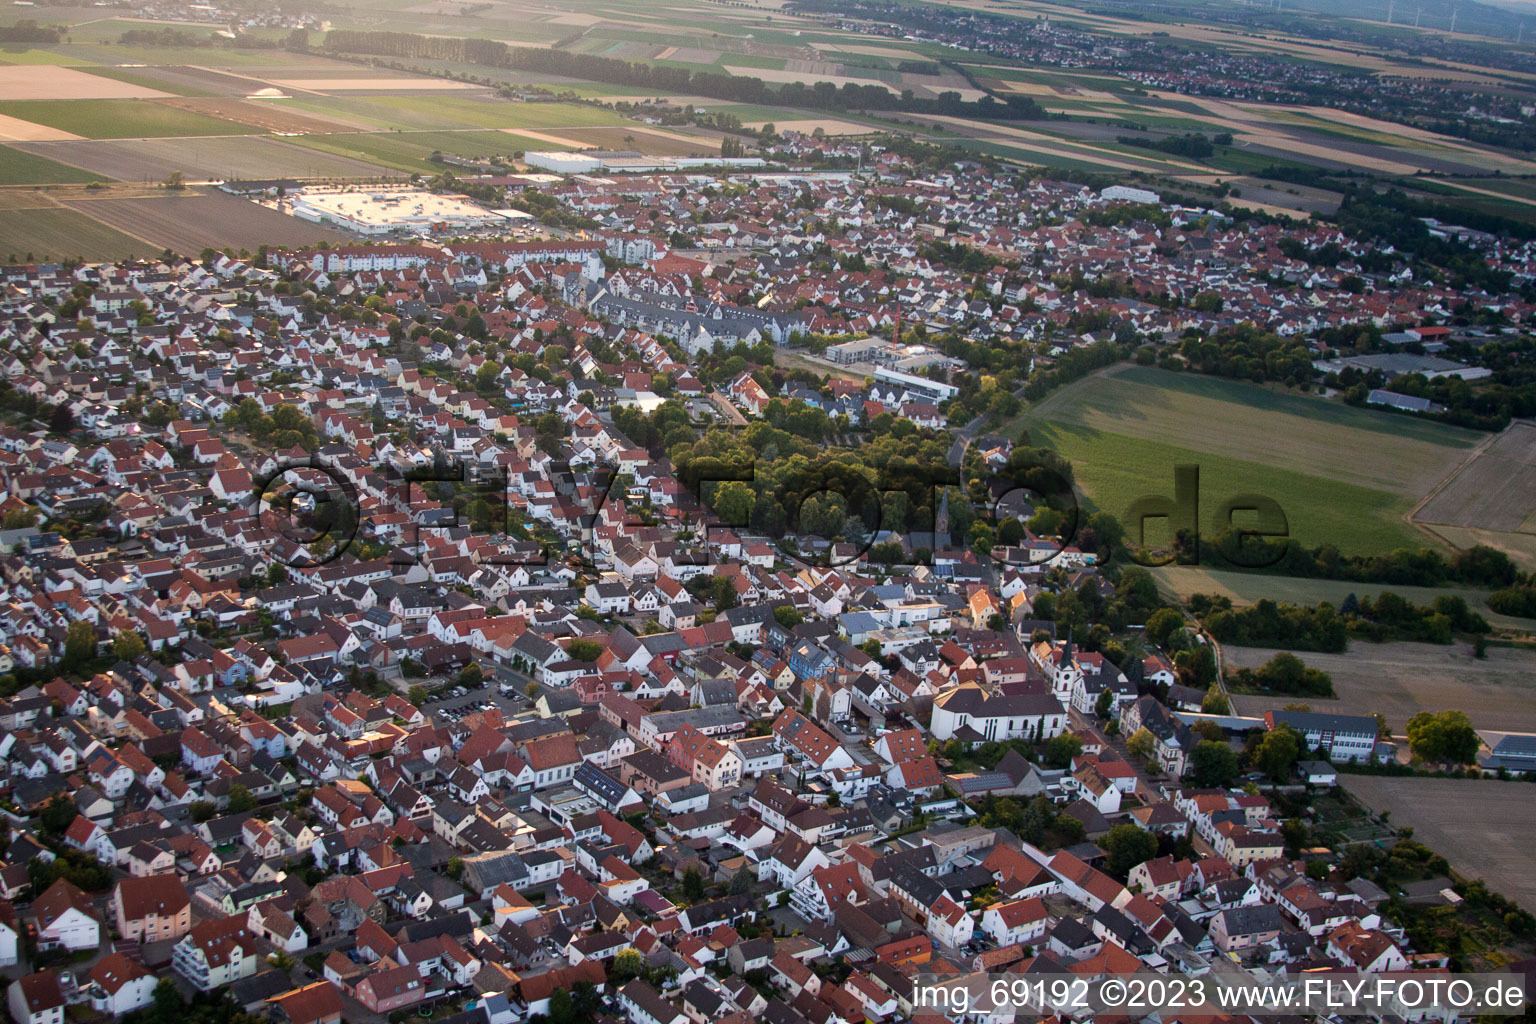 District Roxheim in Bobenheim-Roxheim in the state Rhineland-Palatinate, Germany viewn from the air